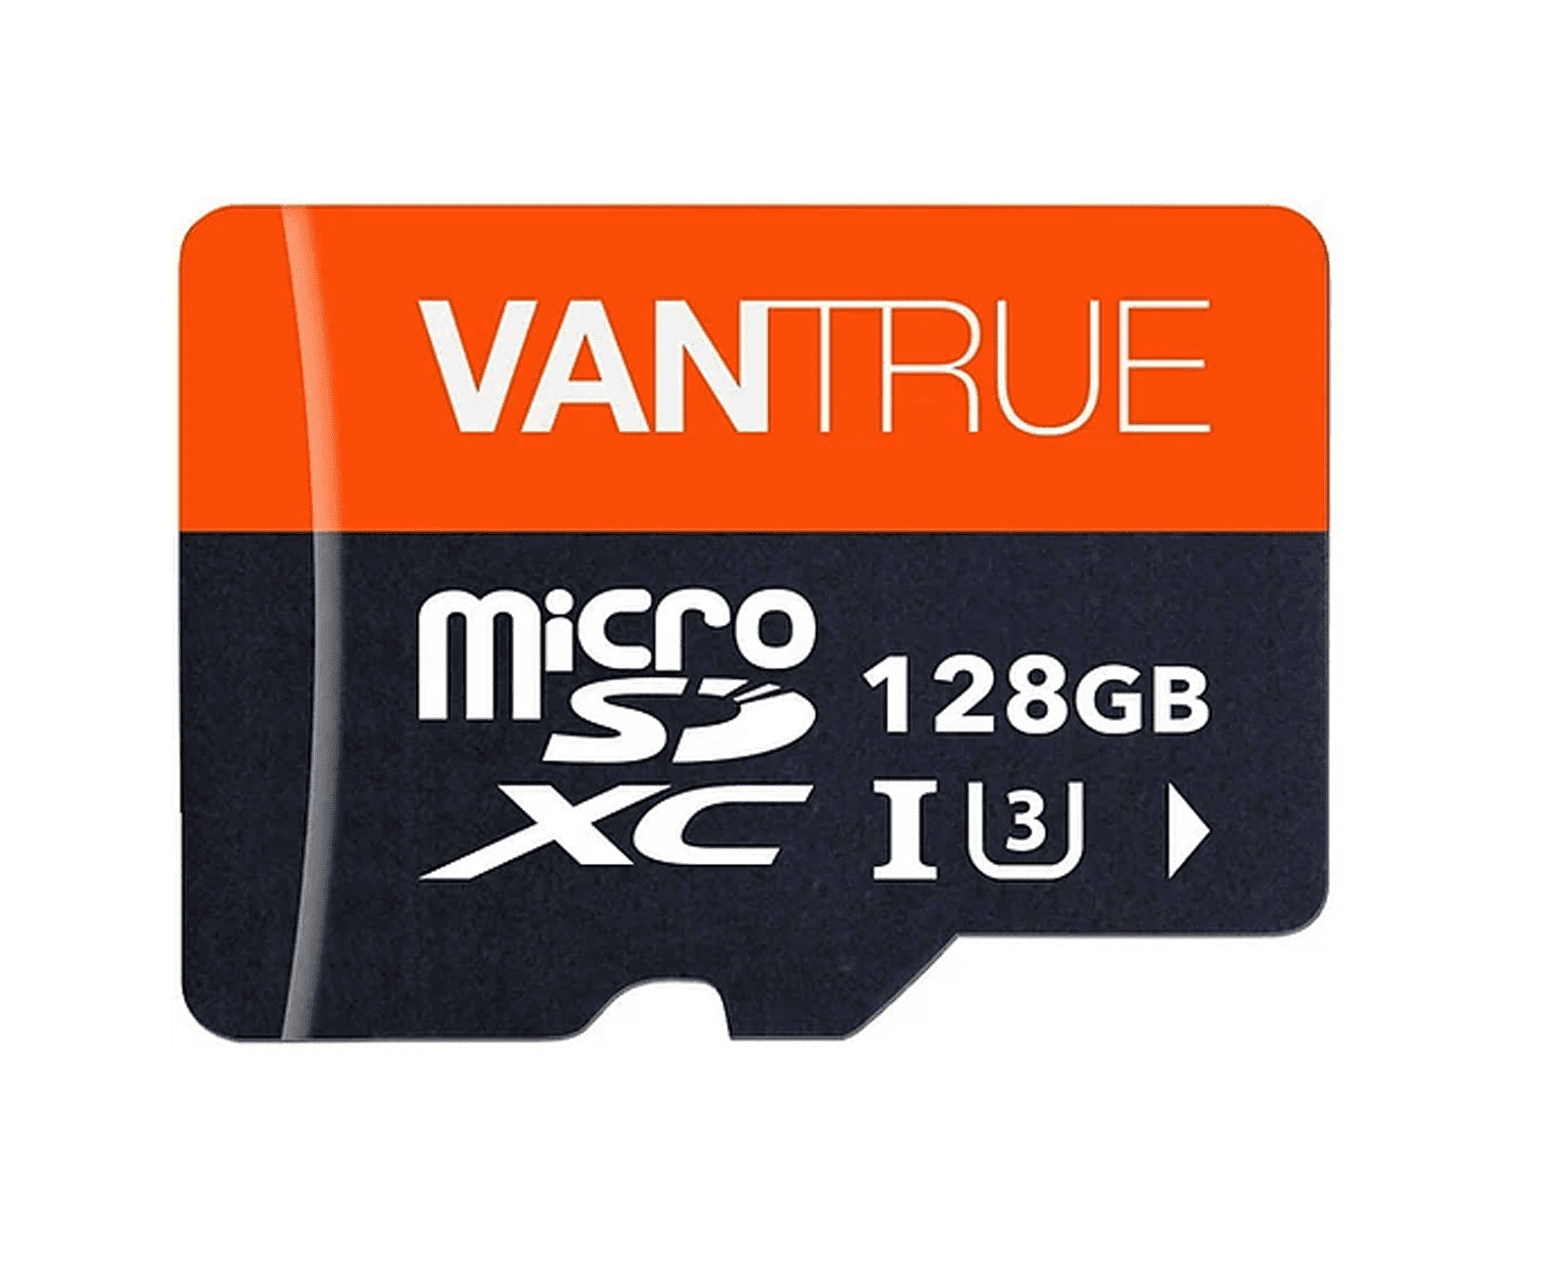 Scheda SD Vantrue da 128 GB